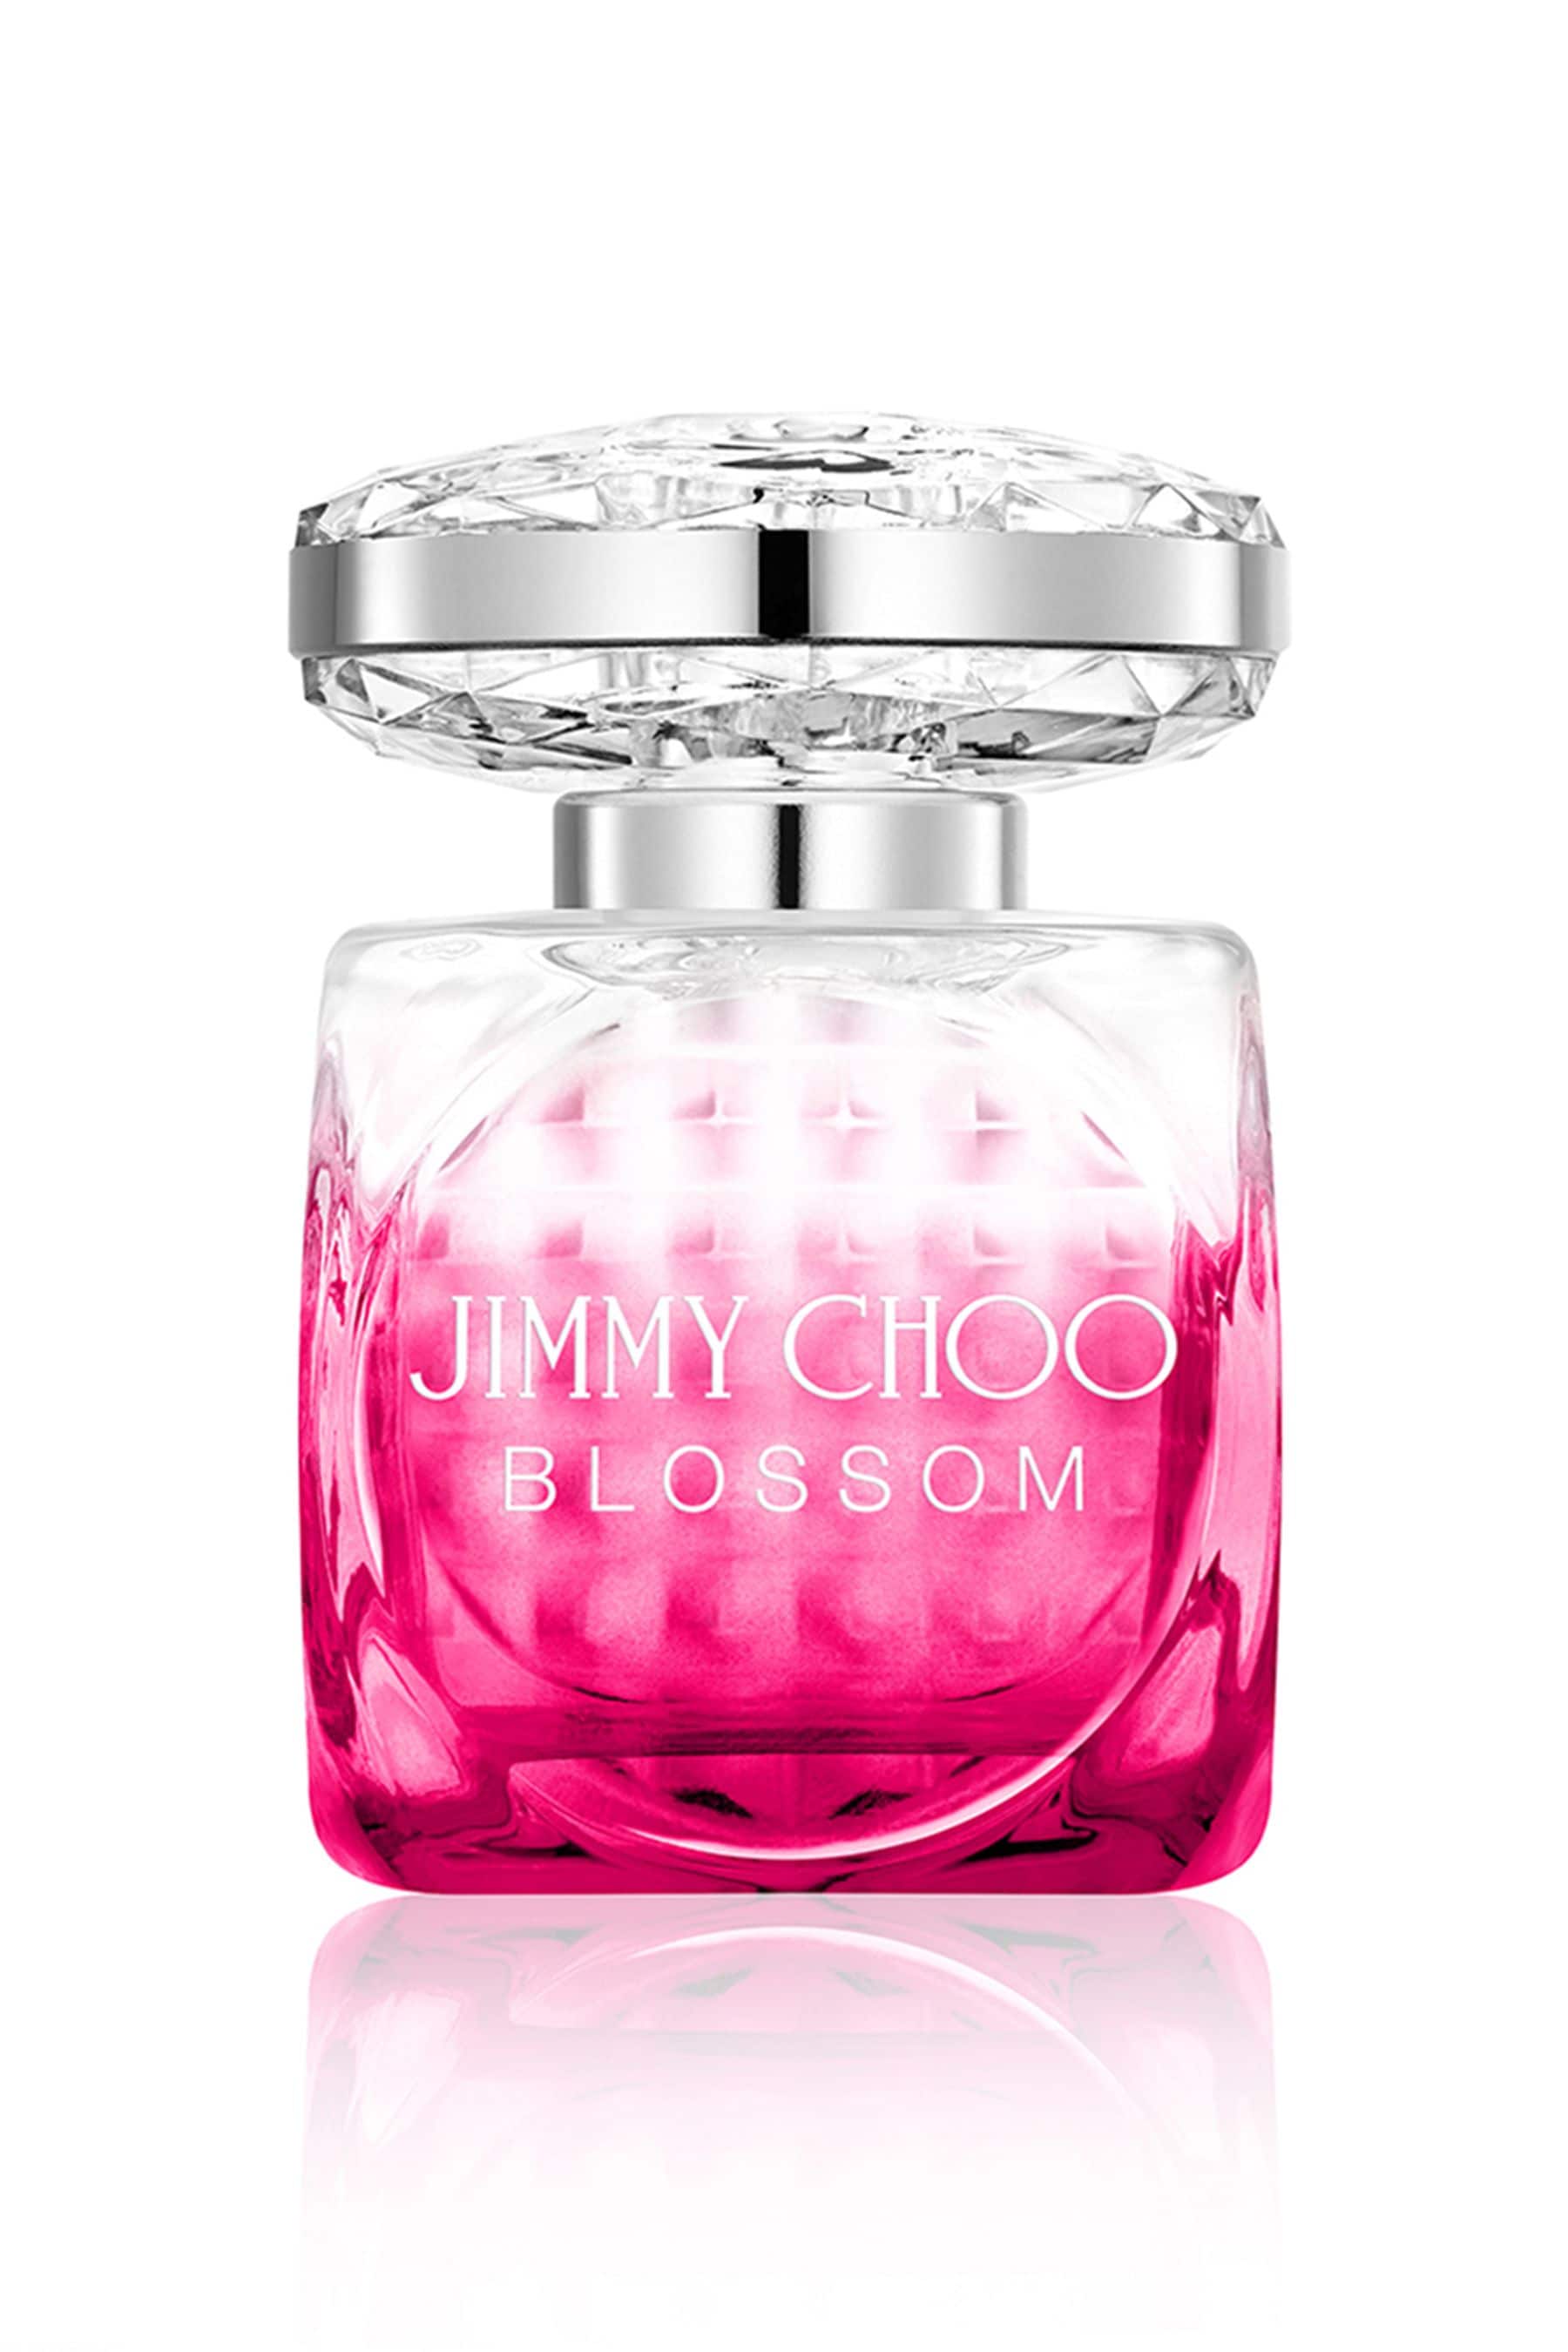 Buy Jimmy Choo Blossom Eau De Parfum 40ml from the Next UK online shop